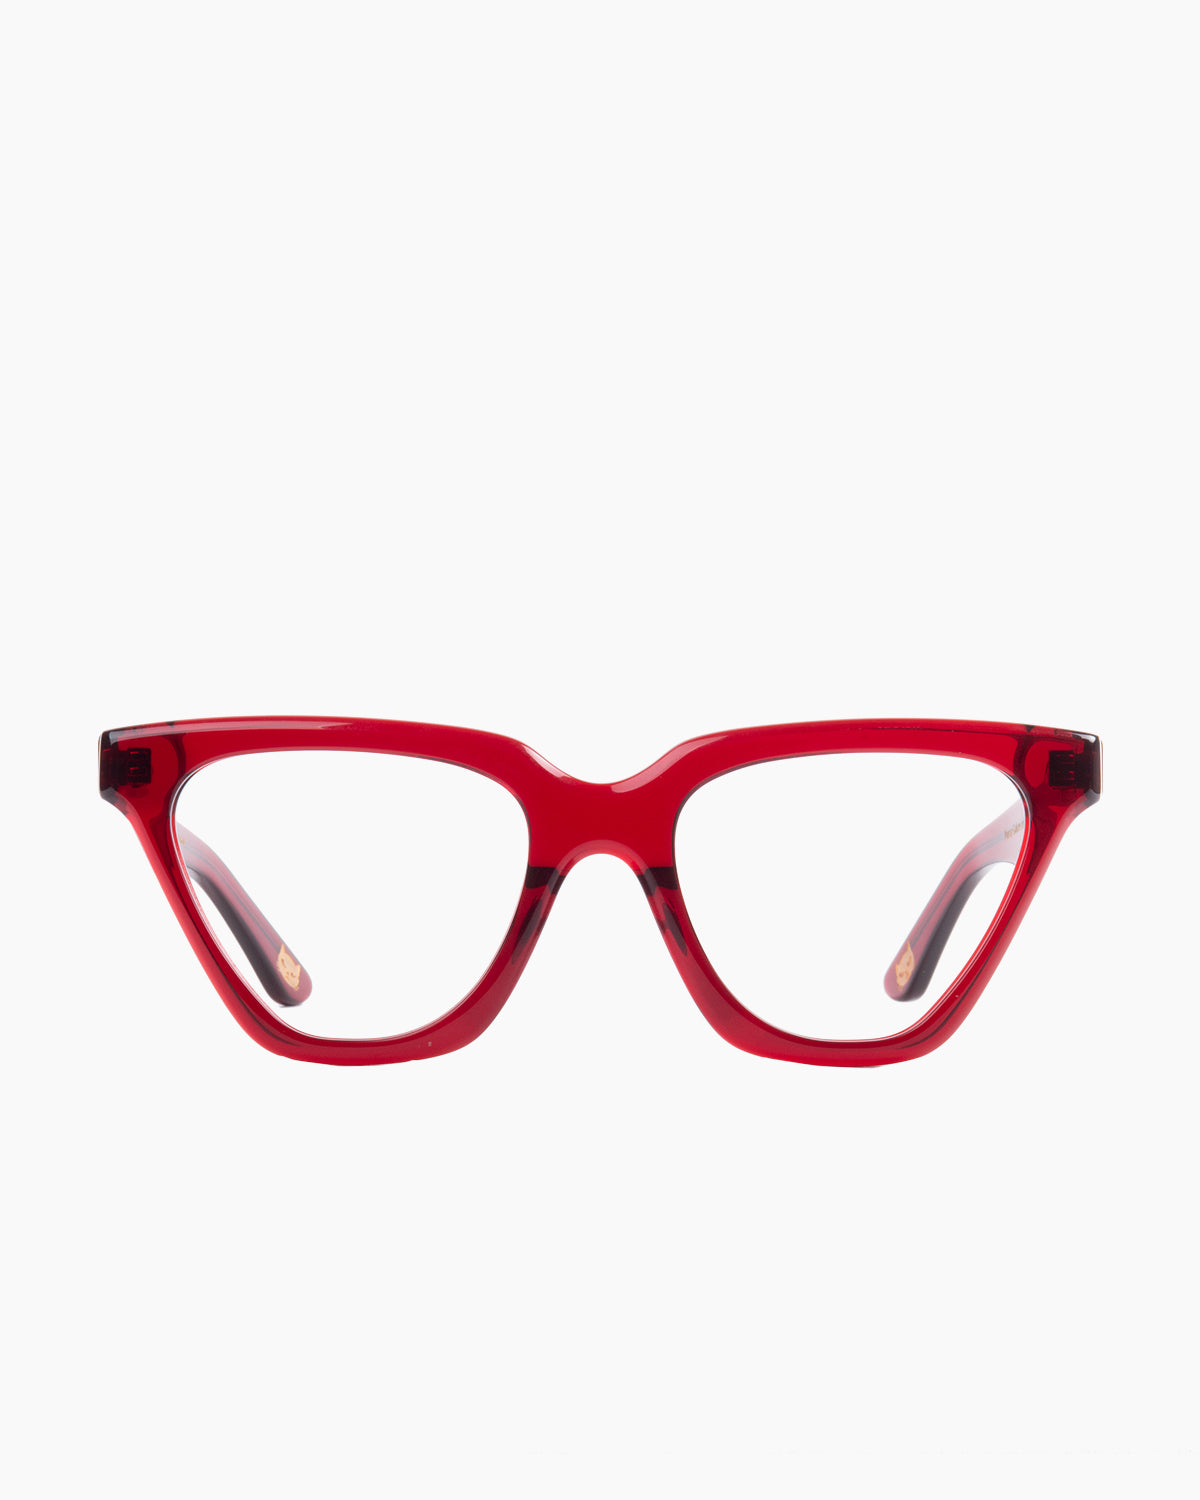 Spectacleeyeworks - Joelle - c730 | Bar à lunettes